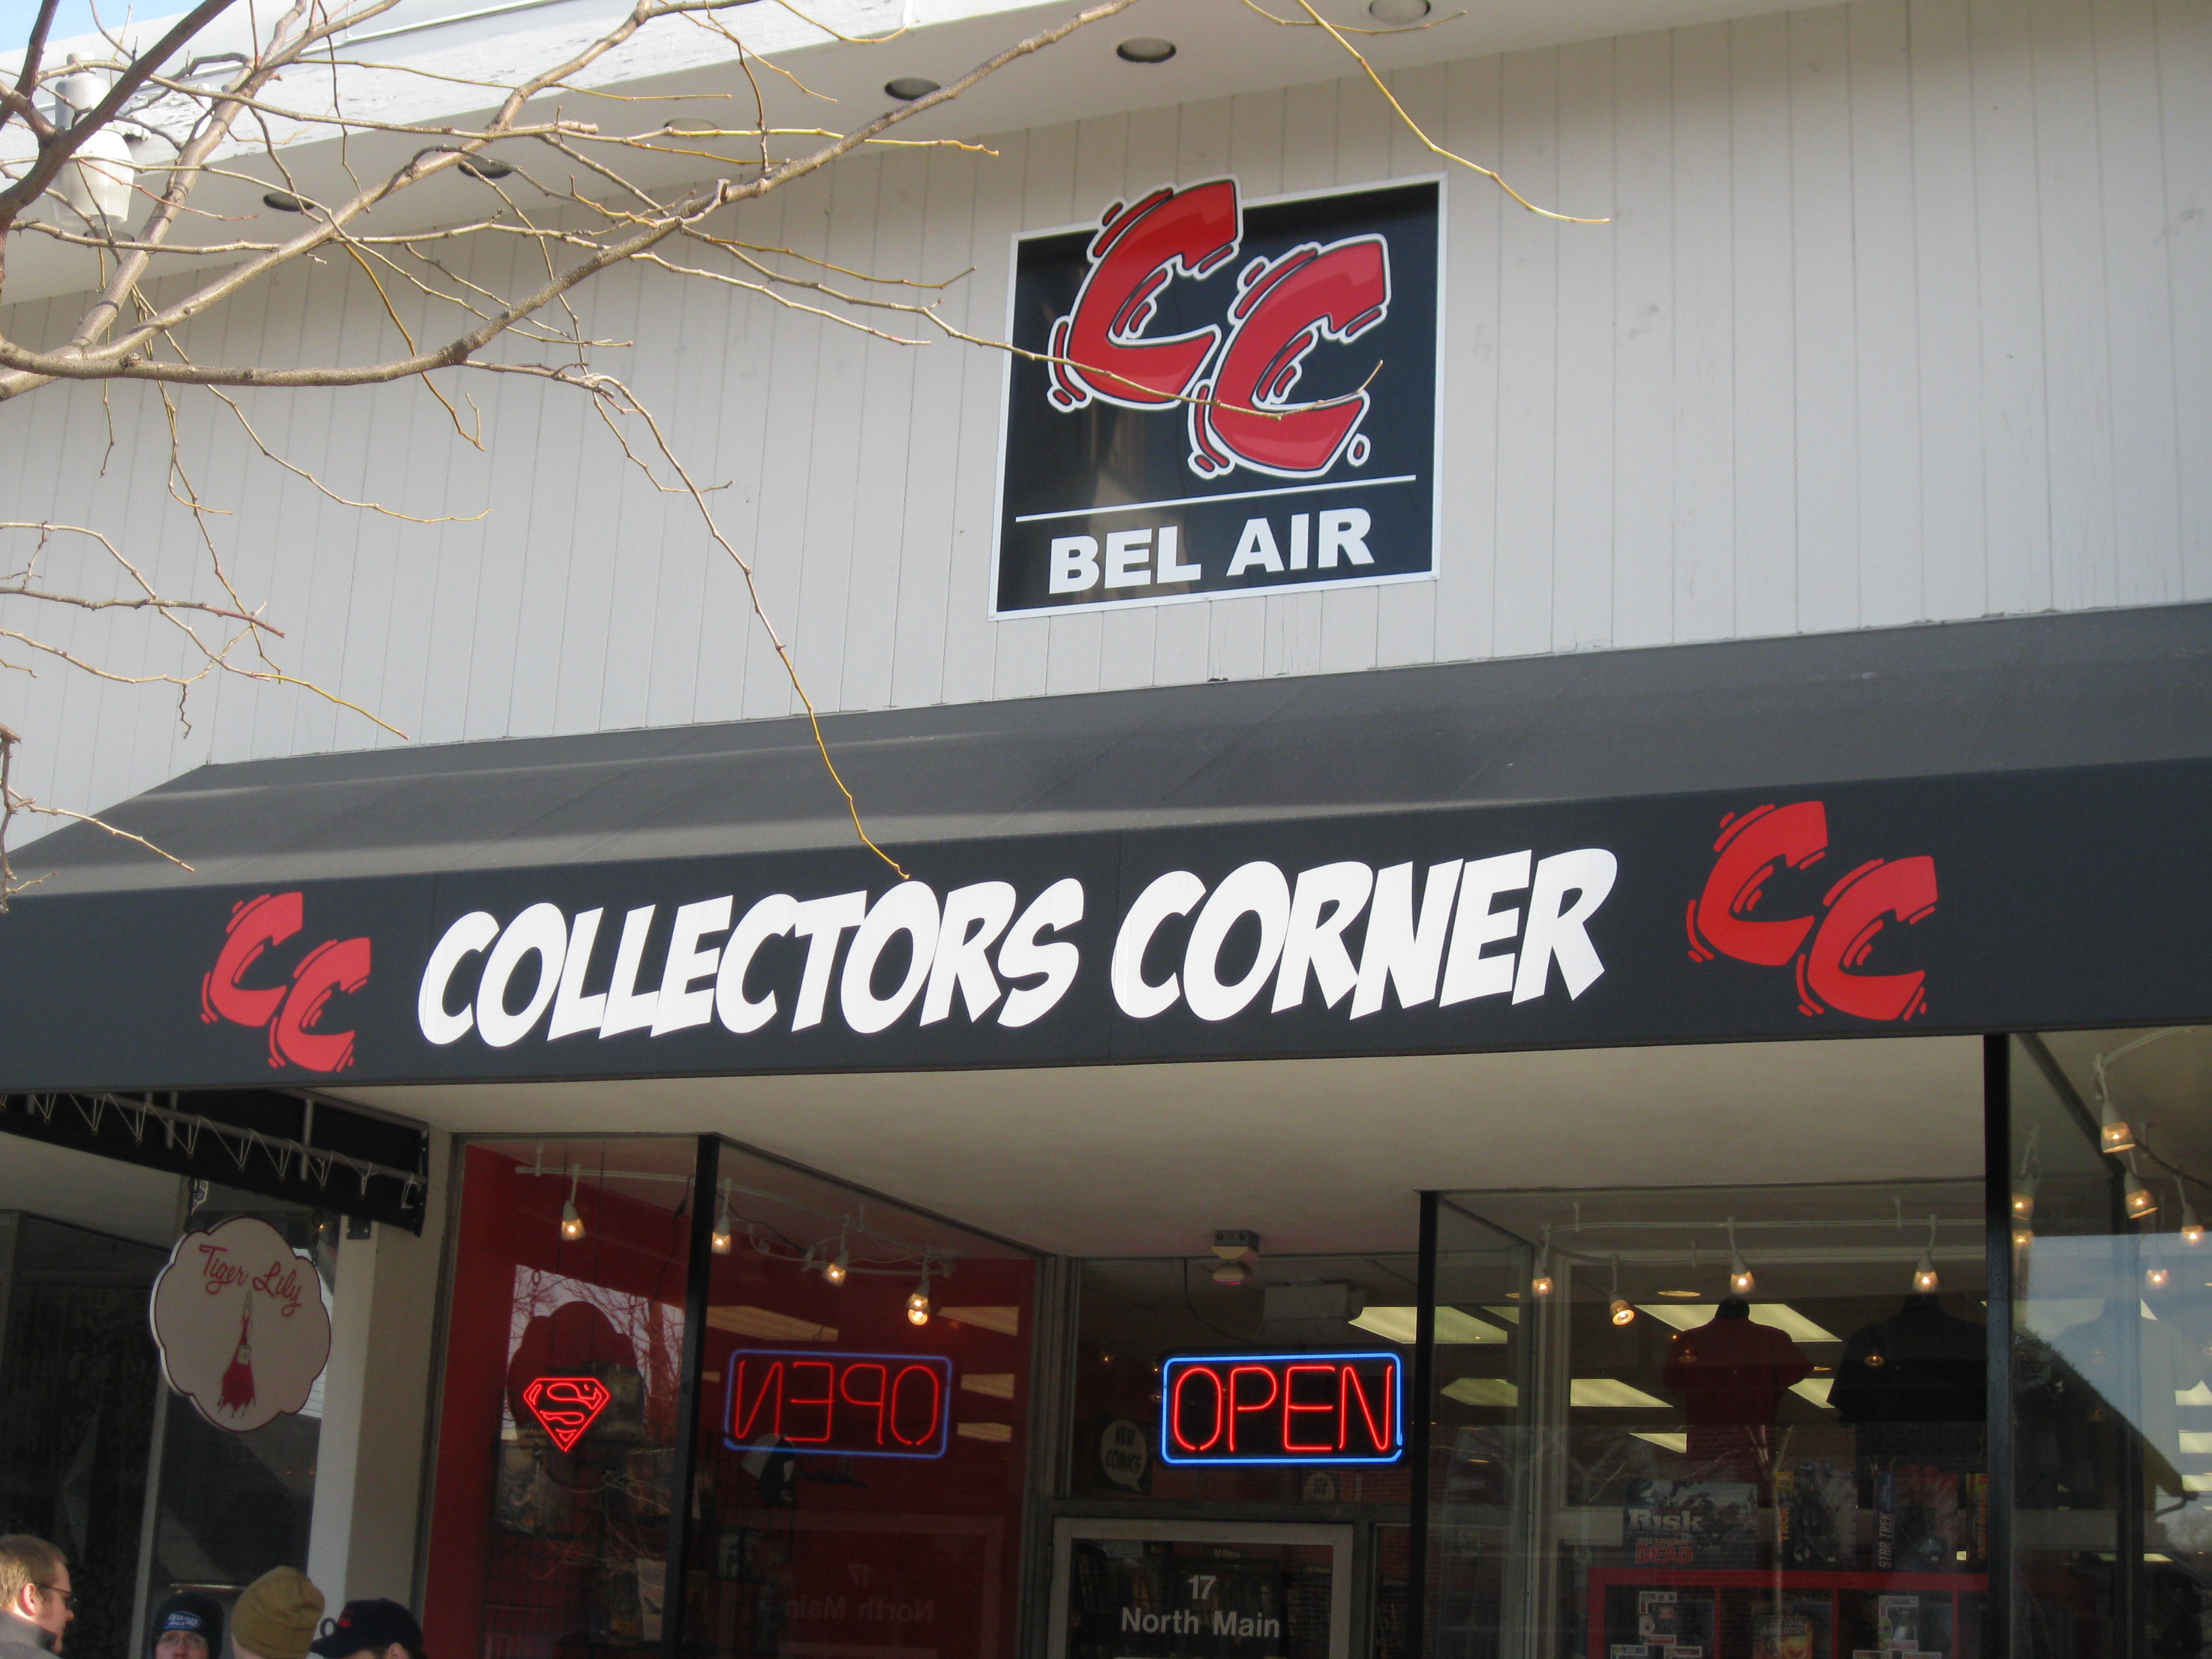 Collectors Corner Bel Air